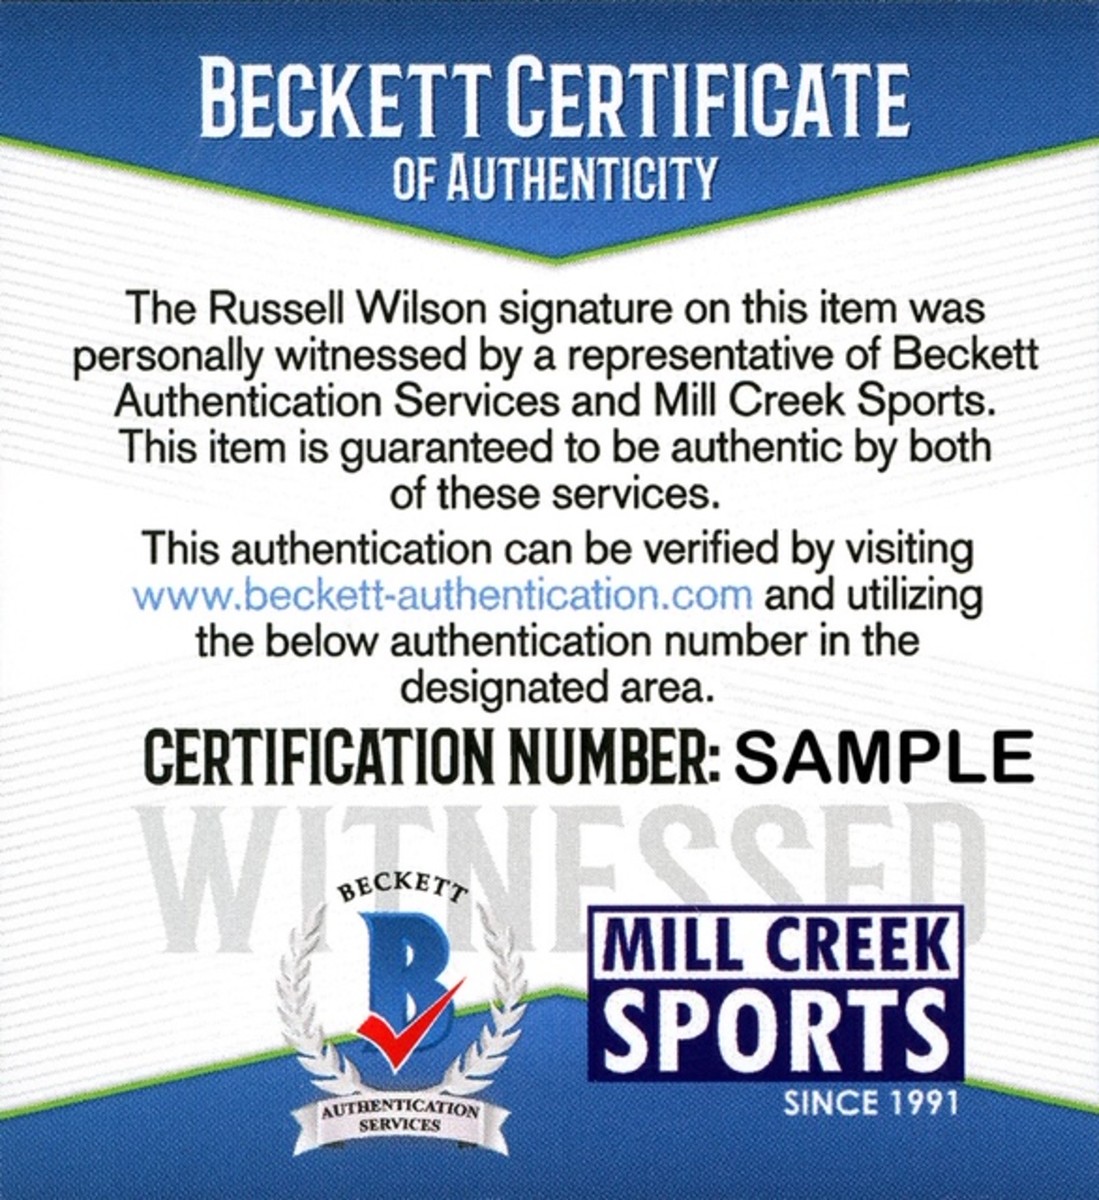 Mill Creek Sports - Authentic Sports Cards/Memorabilia Since 1991